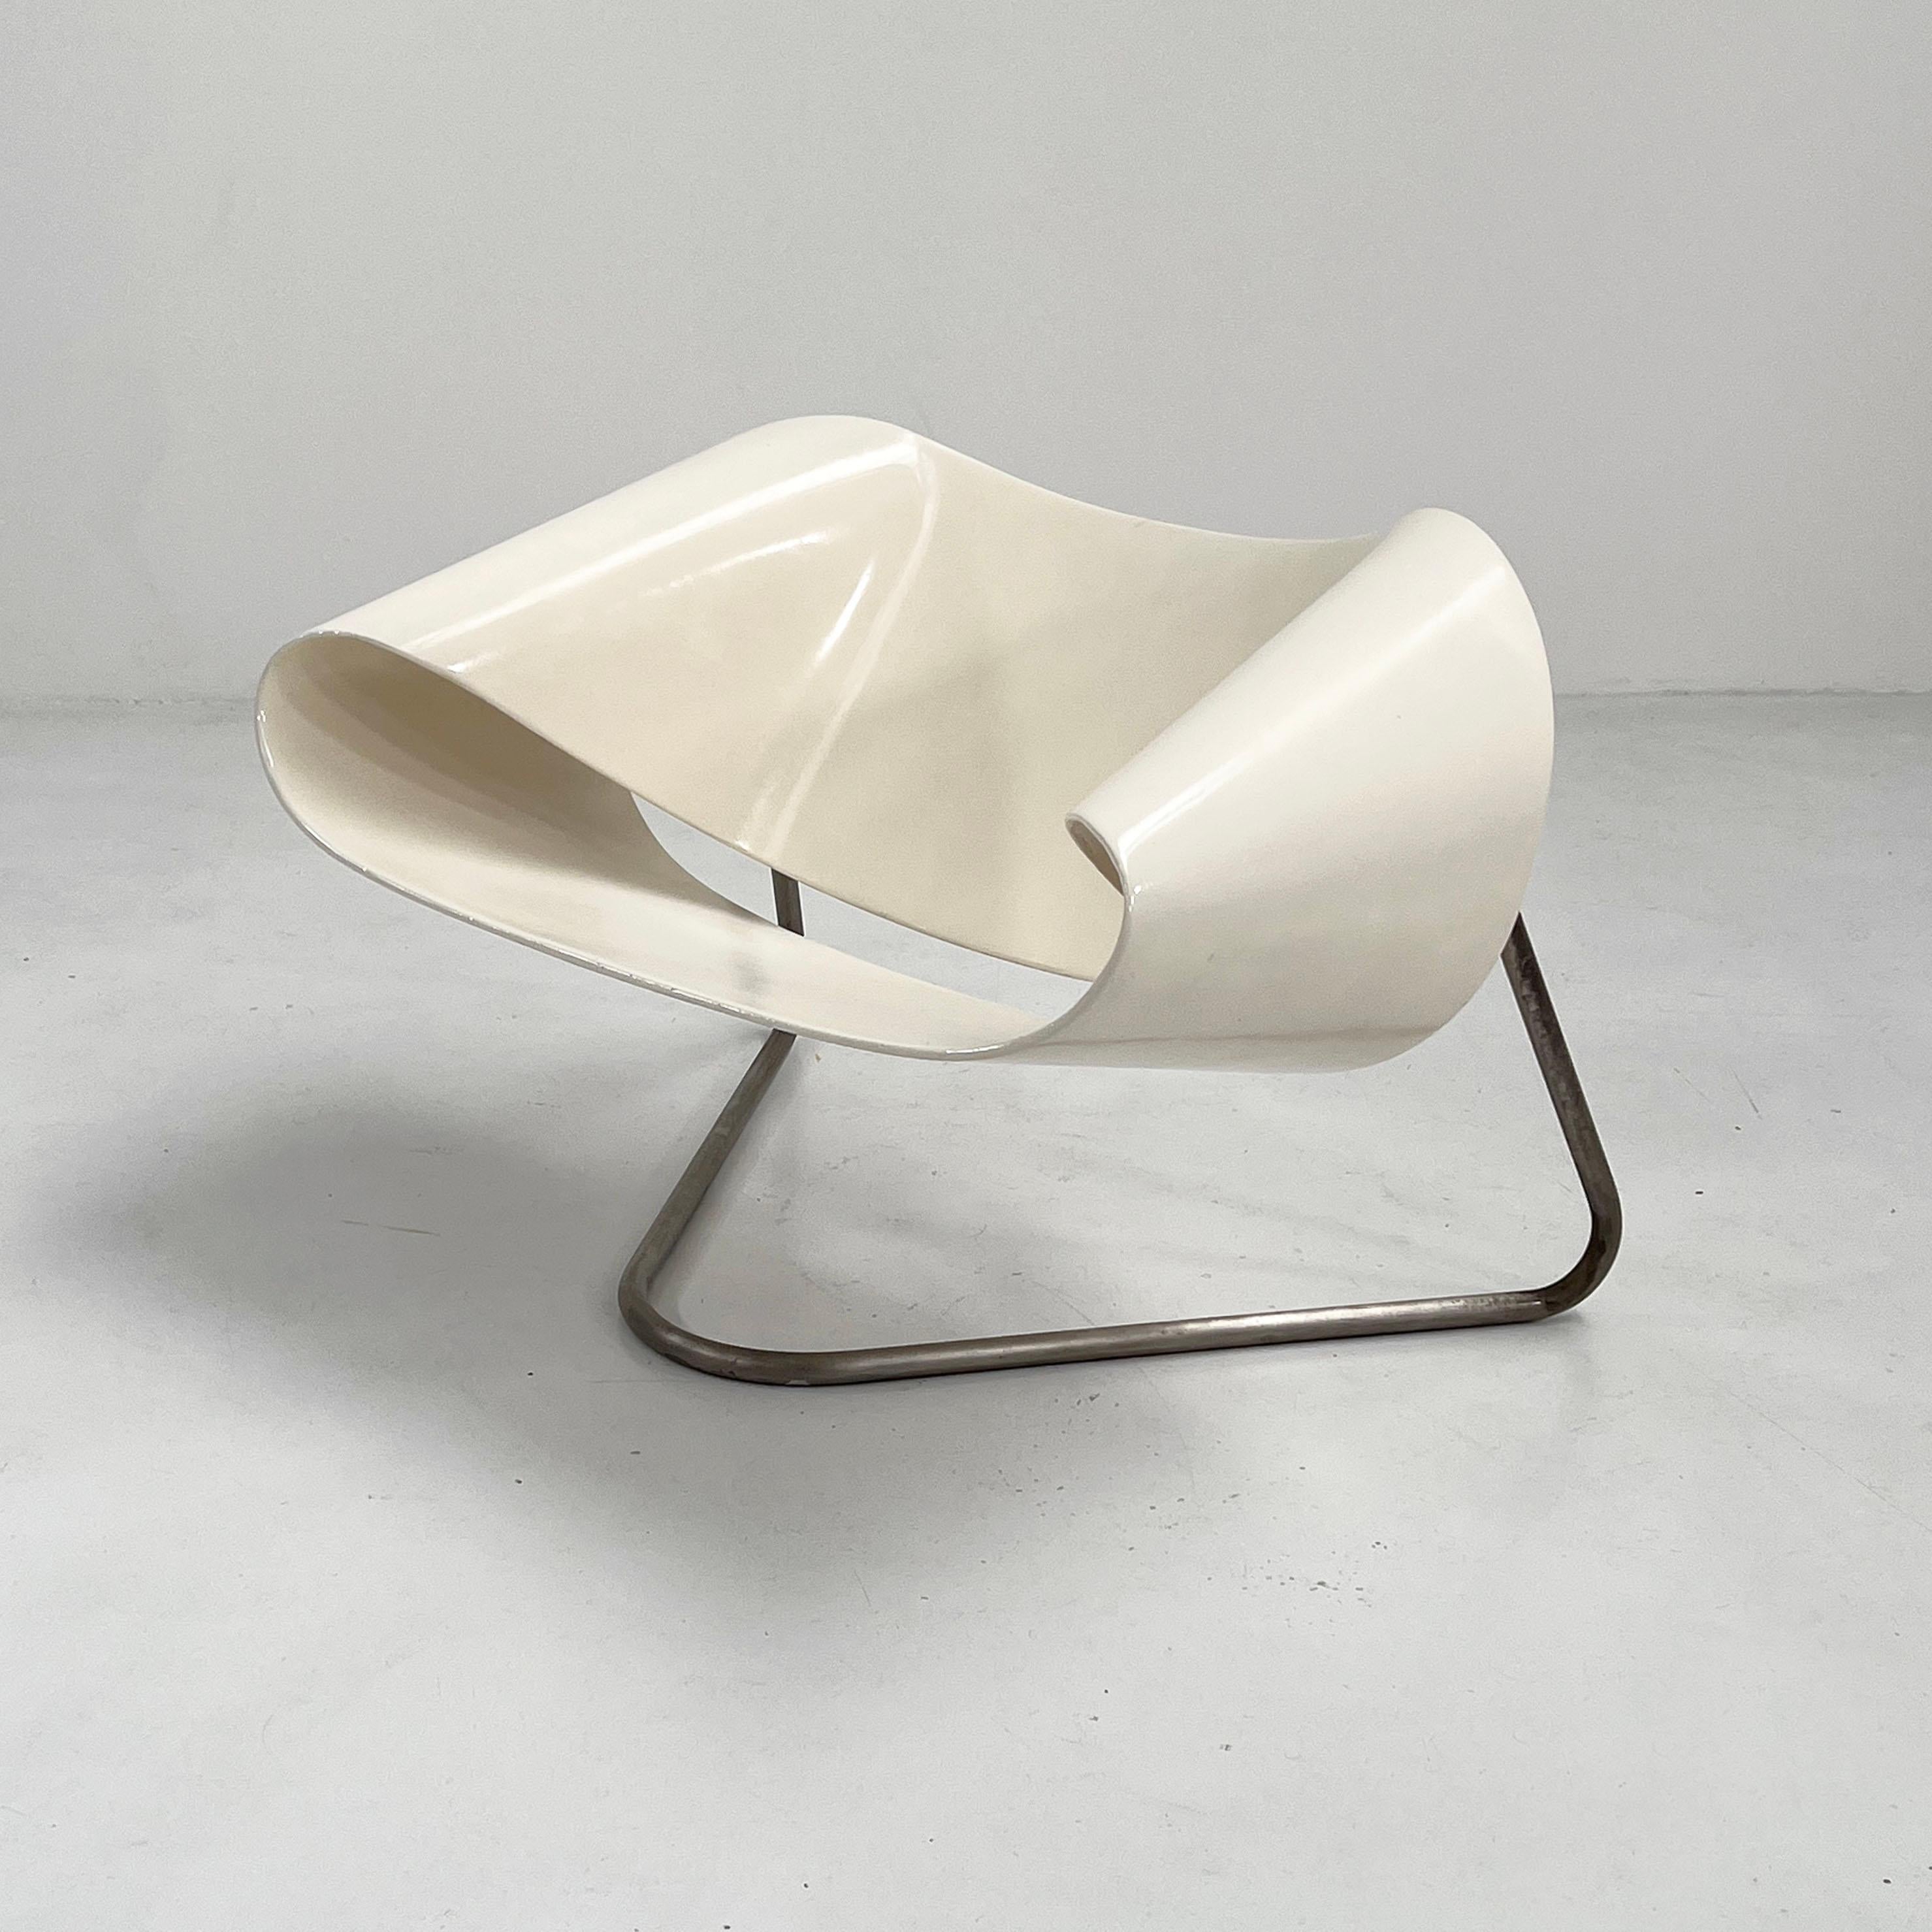 Designer -  Franca Stagi & Cesare Leonardi 
Producer - Bernini
Model - Model CL9 Ribbon Chair
Design Period - Sixties
Measurements - Width 91 cm x Depth 75 cm x Height 64 cm x Seat Height 36 cm
Materials - Fiberglass, Metal
Color - White,